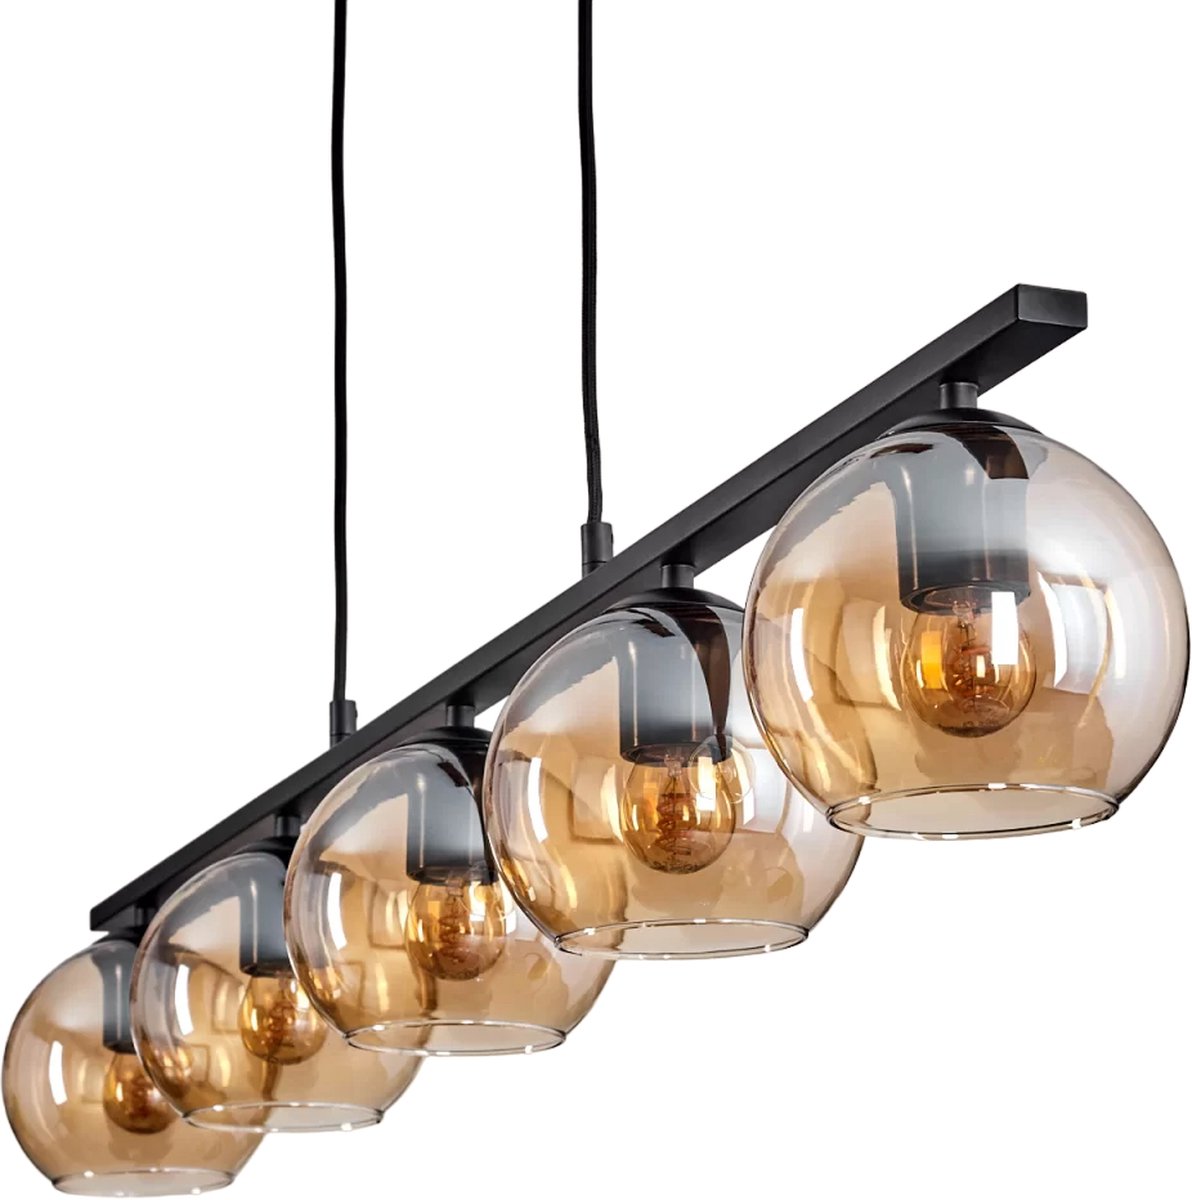 Vintage moderne glazen hanglamp - langwerpig amber glazen moderne plafondlamp - hanglamp, metaal/glas hanglamp in zwart/amber, 5-lamps armatuur in vintage/retro design met glazen kappen (Ø 15 cm), max. hoogte 111 cm, 5 x E27